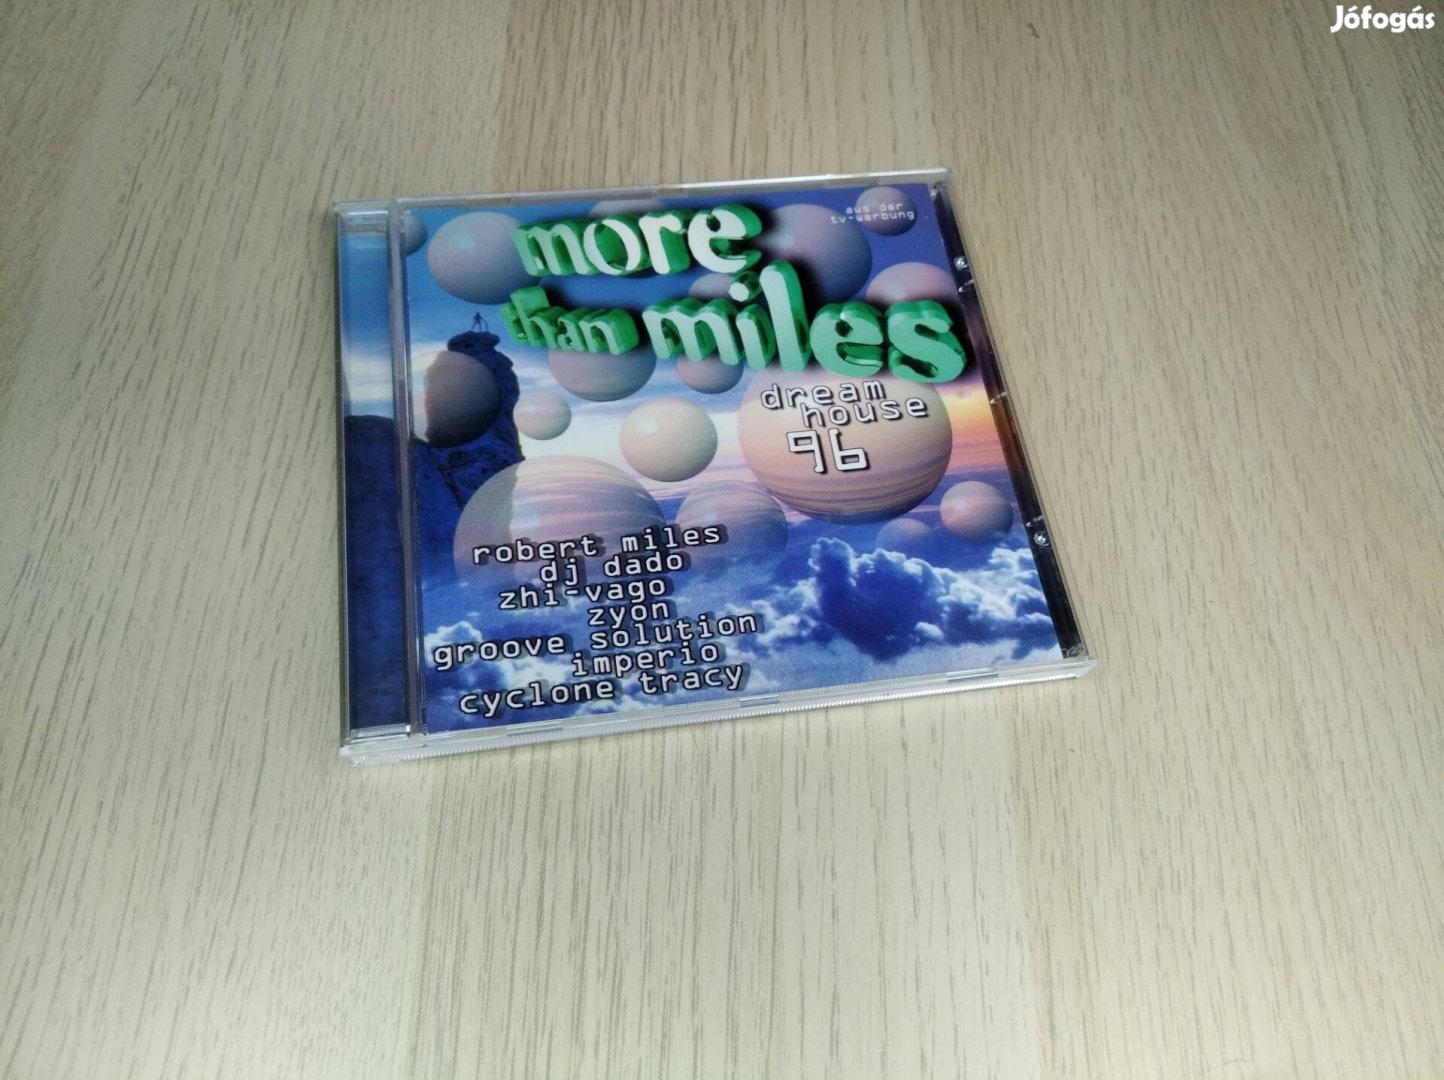 More Than Miles - Dreamhouse 96 / CD